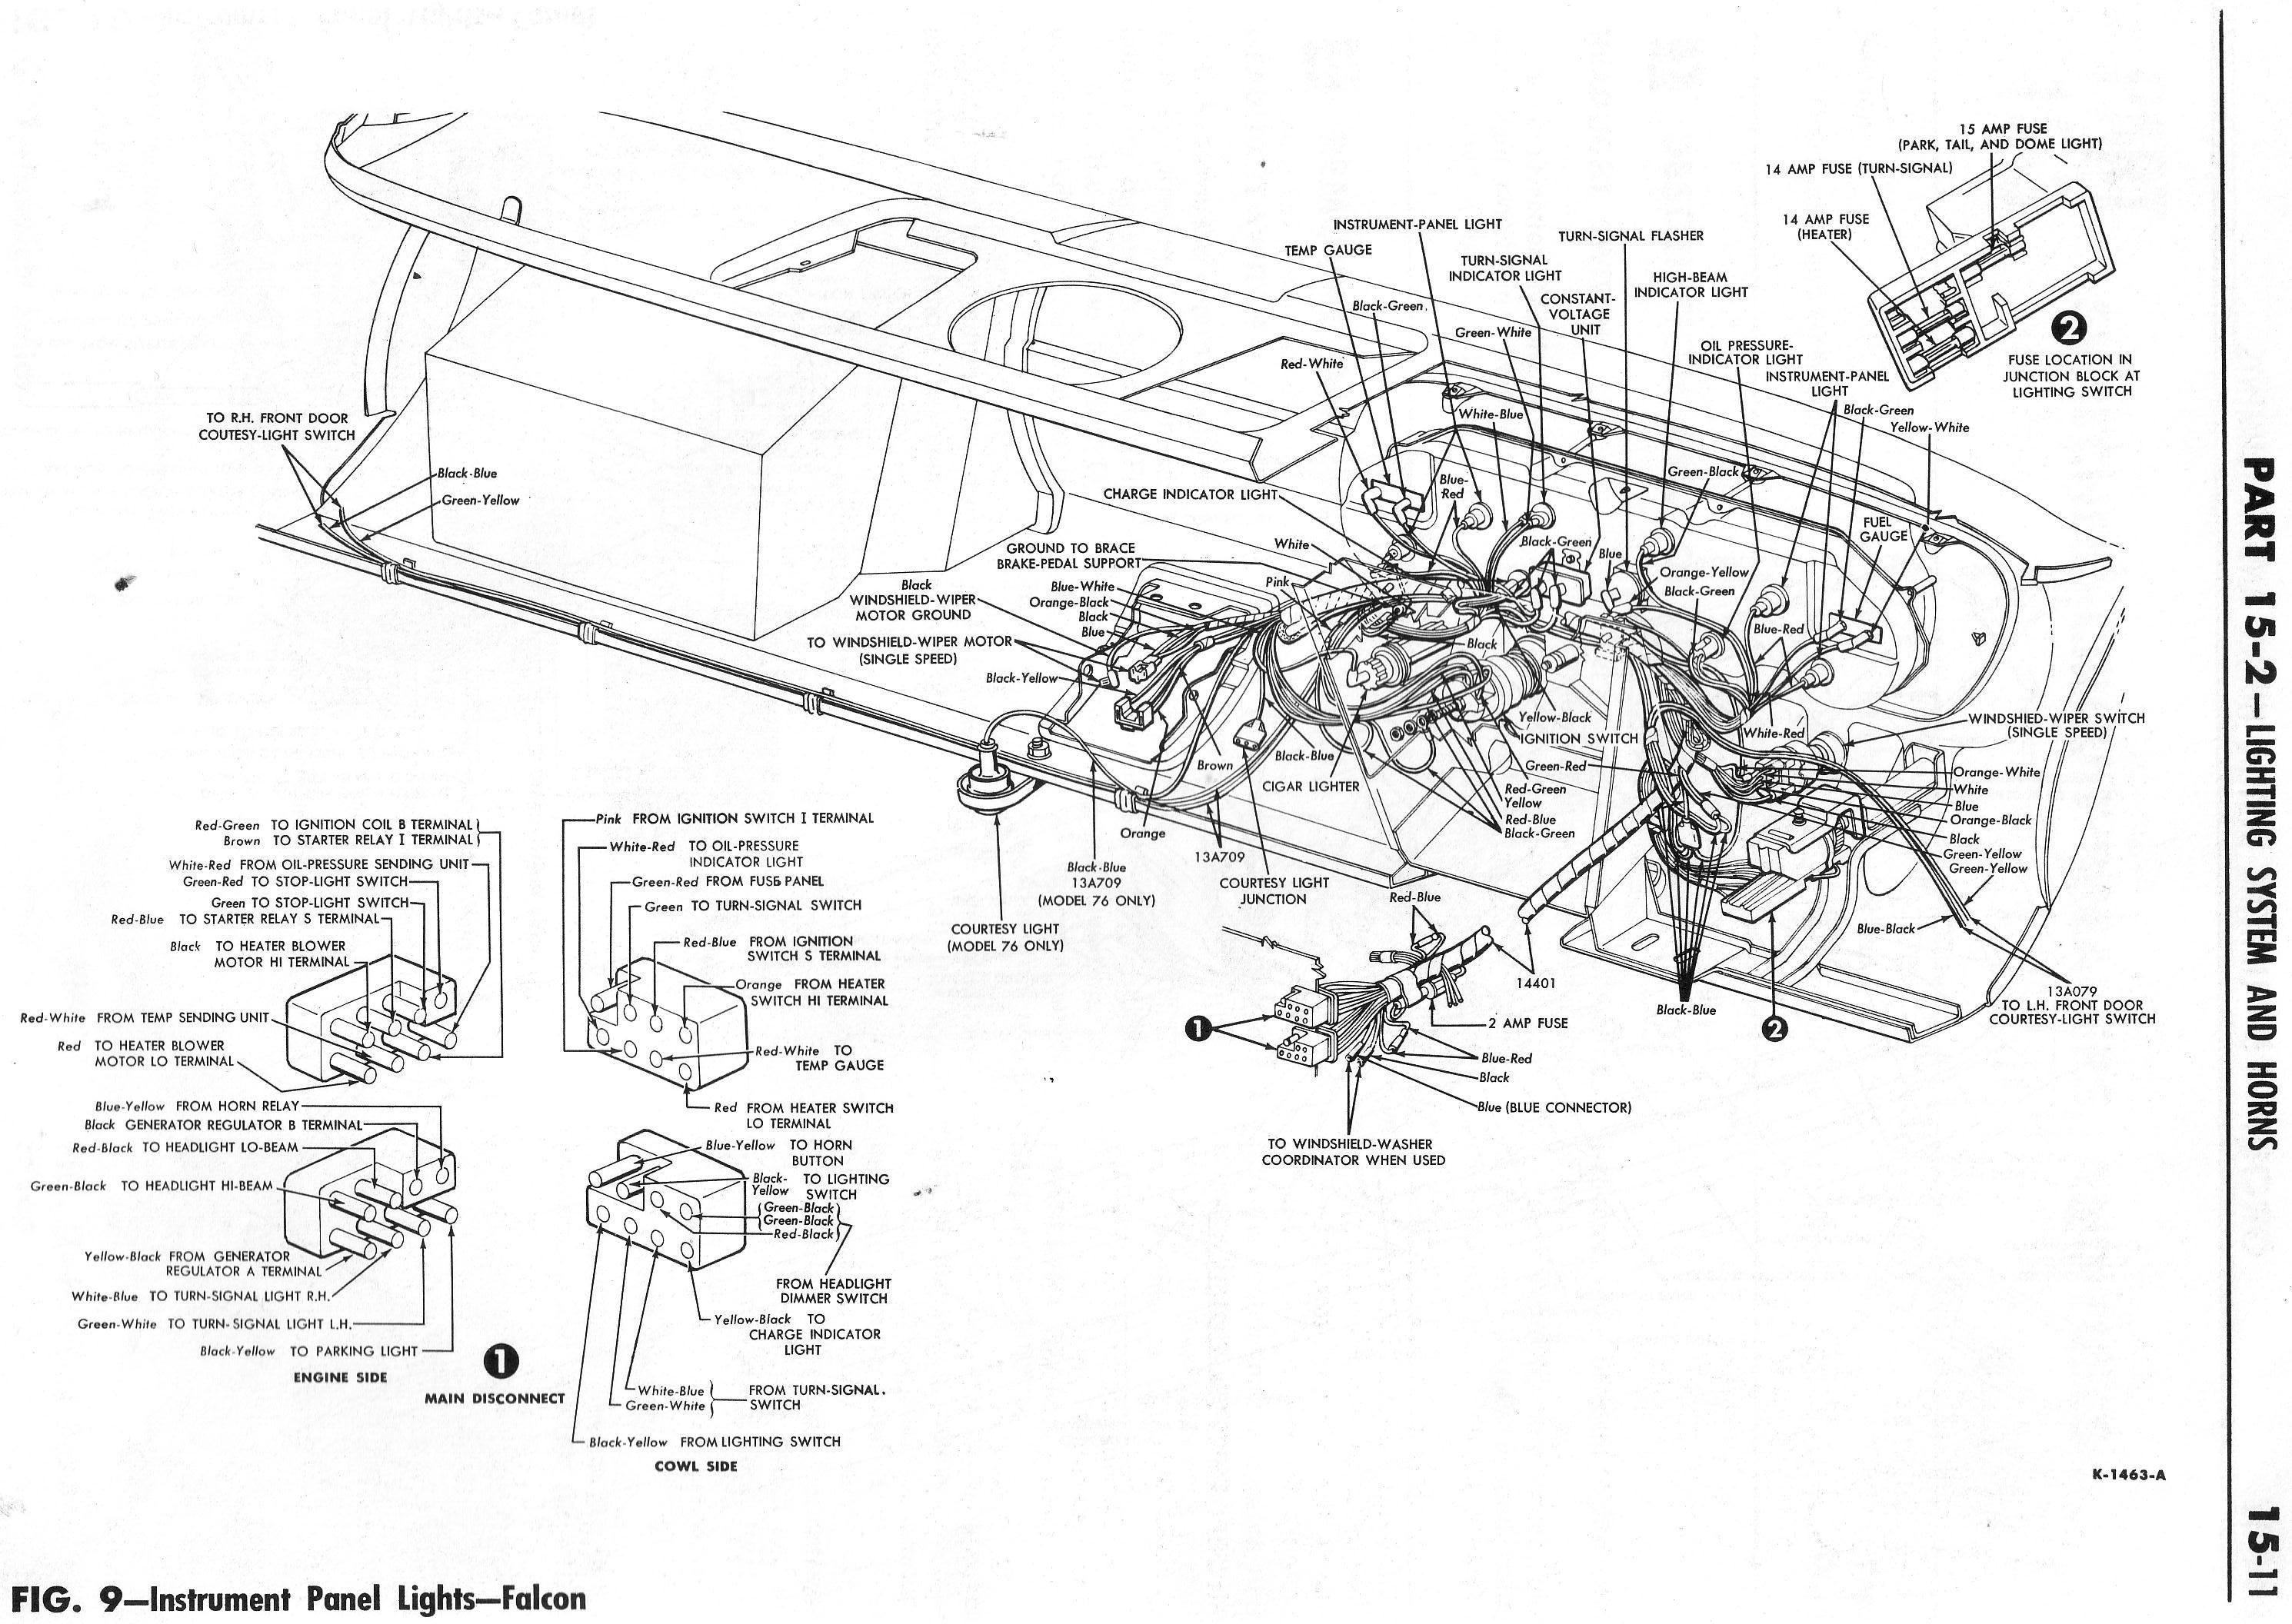 Bmw Car Parts Diagram Pin by Ayaco 011 On Auto Manual Parts Wiring Diagram Of Bmw Car Parts Diagram